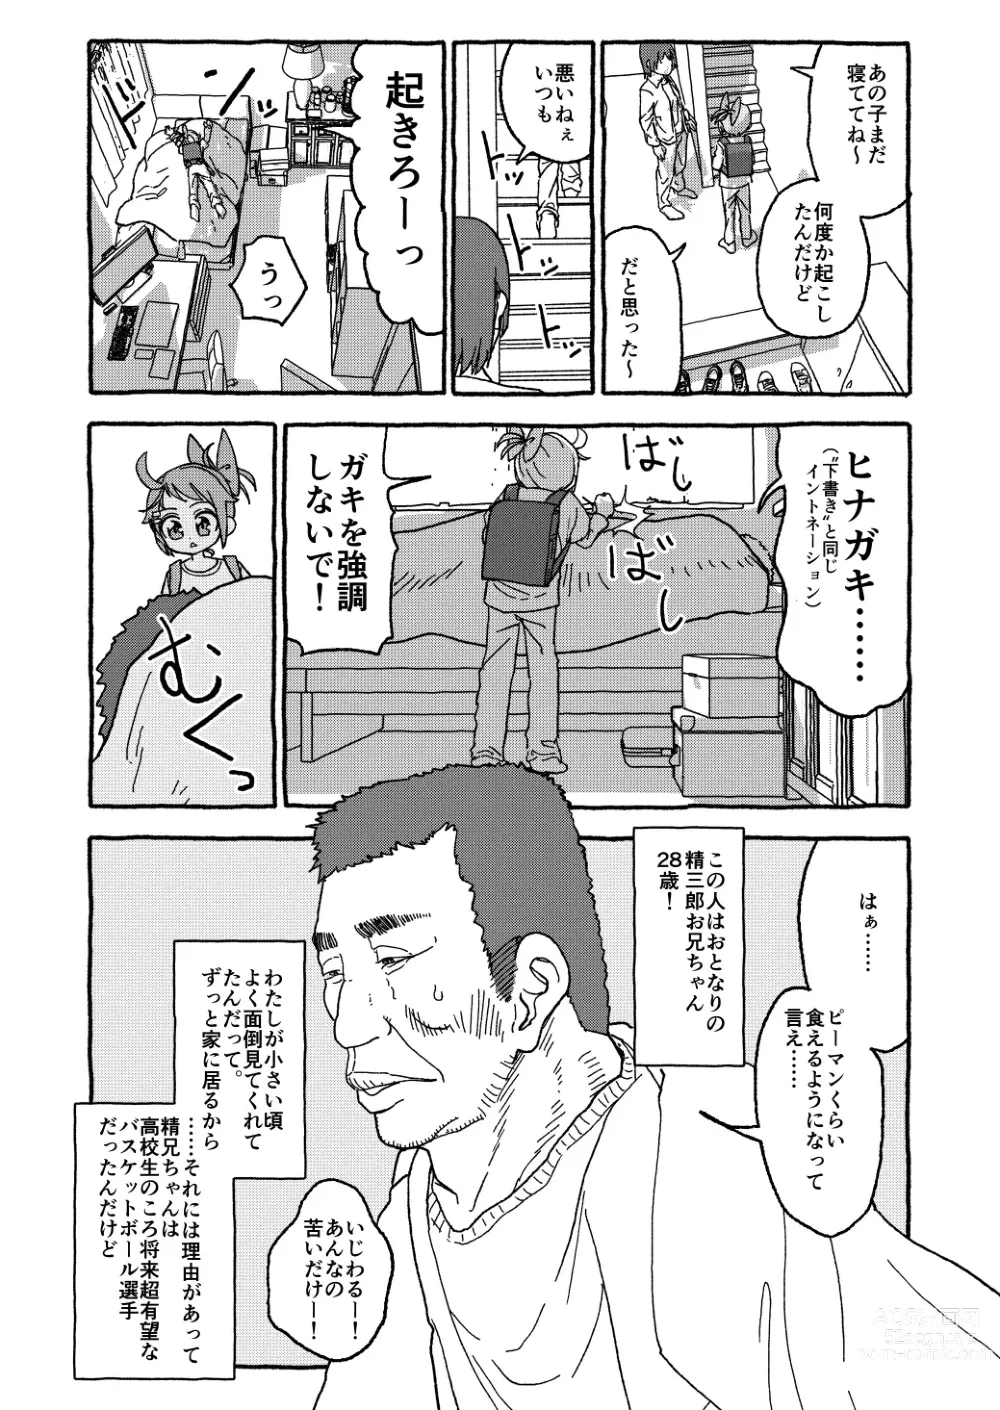 Page 6 of doujinshi Otona Gokkun Update!